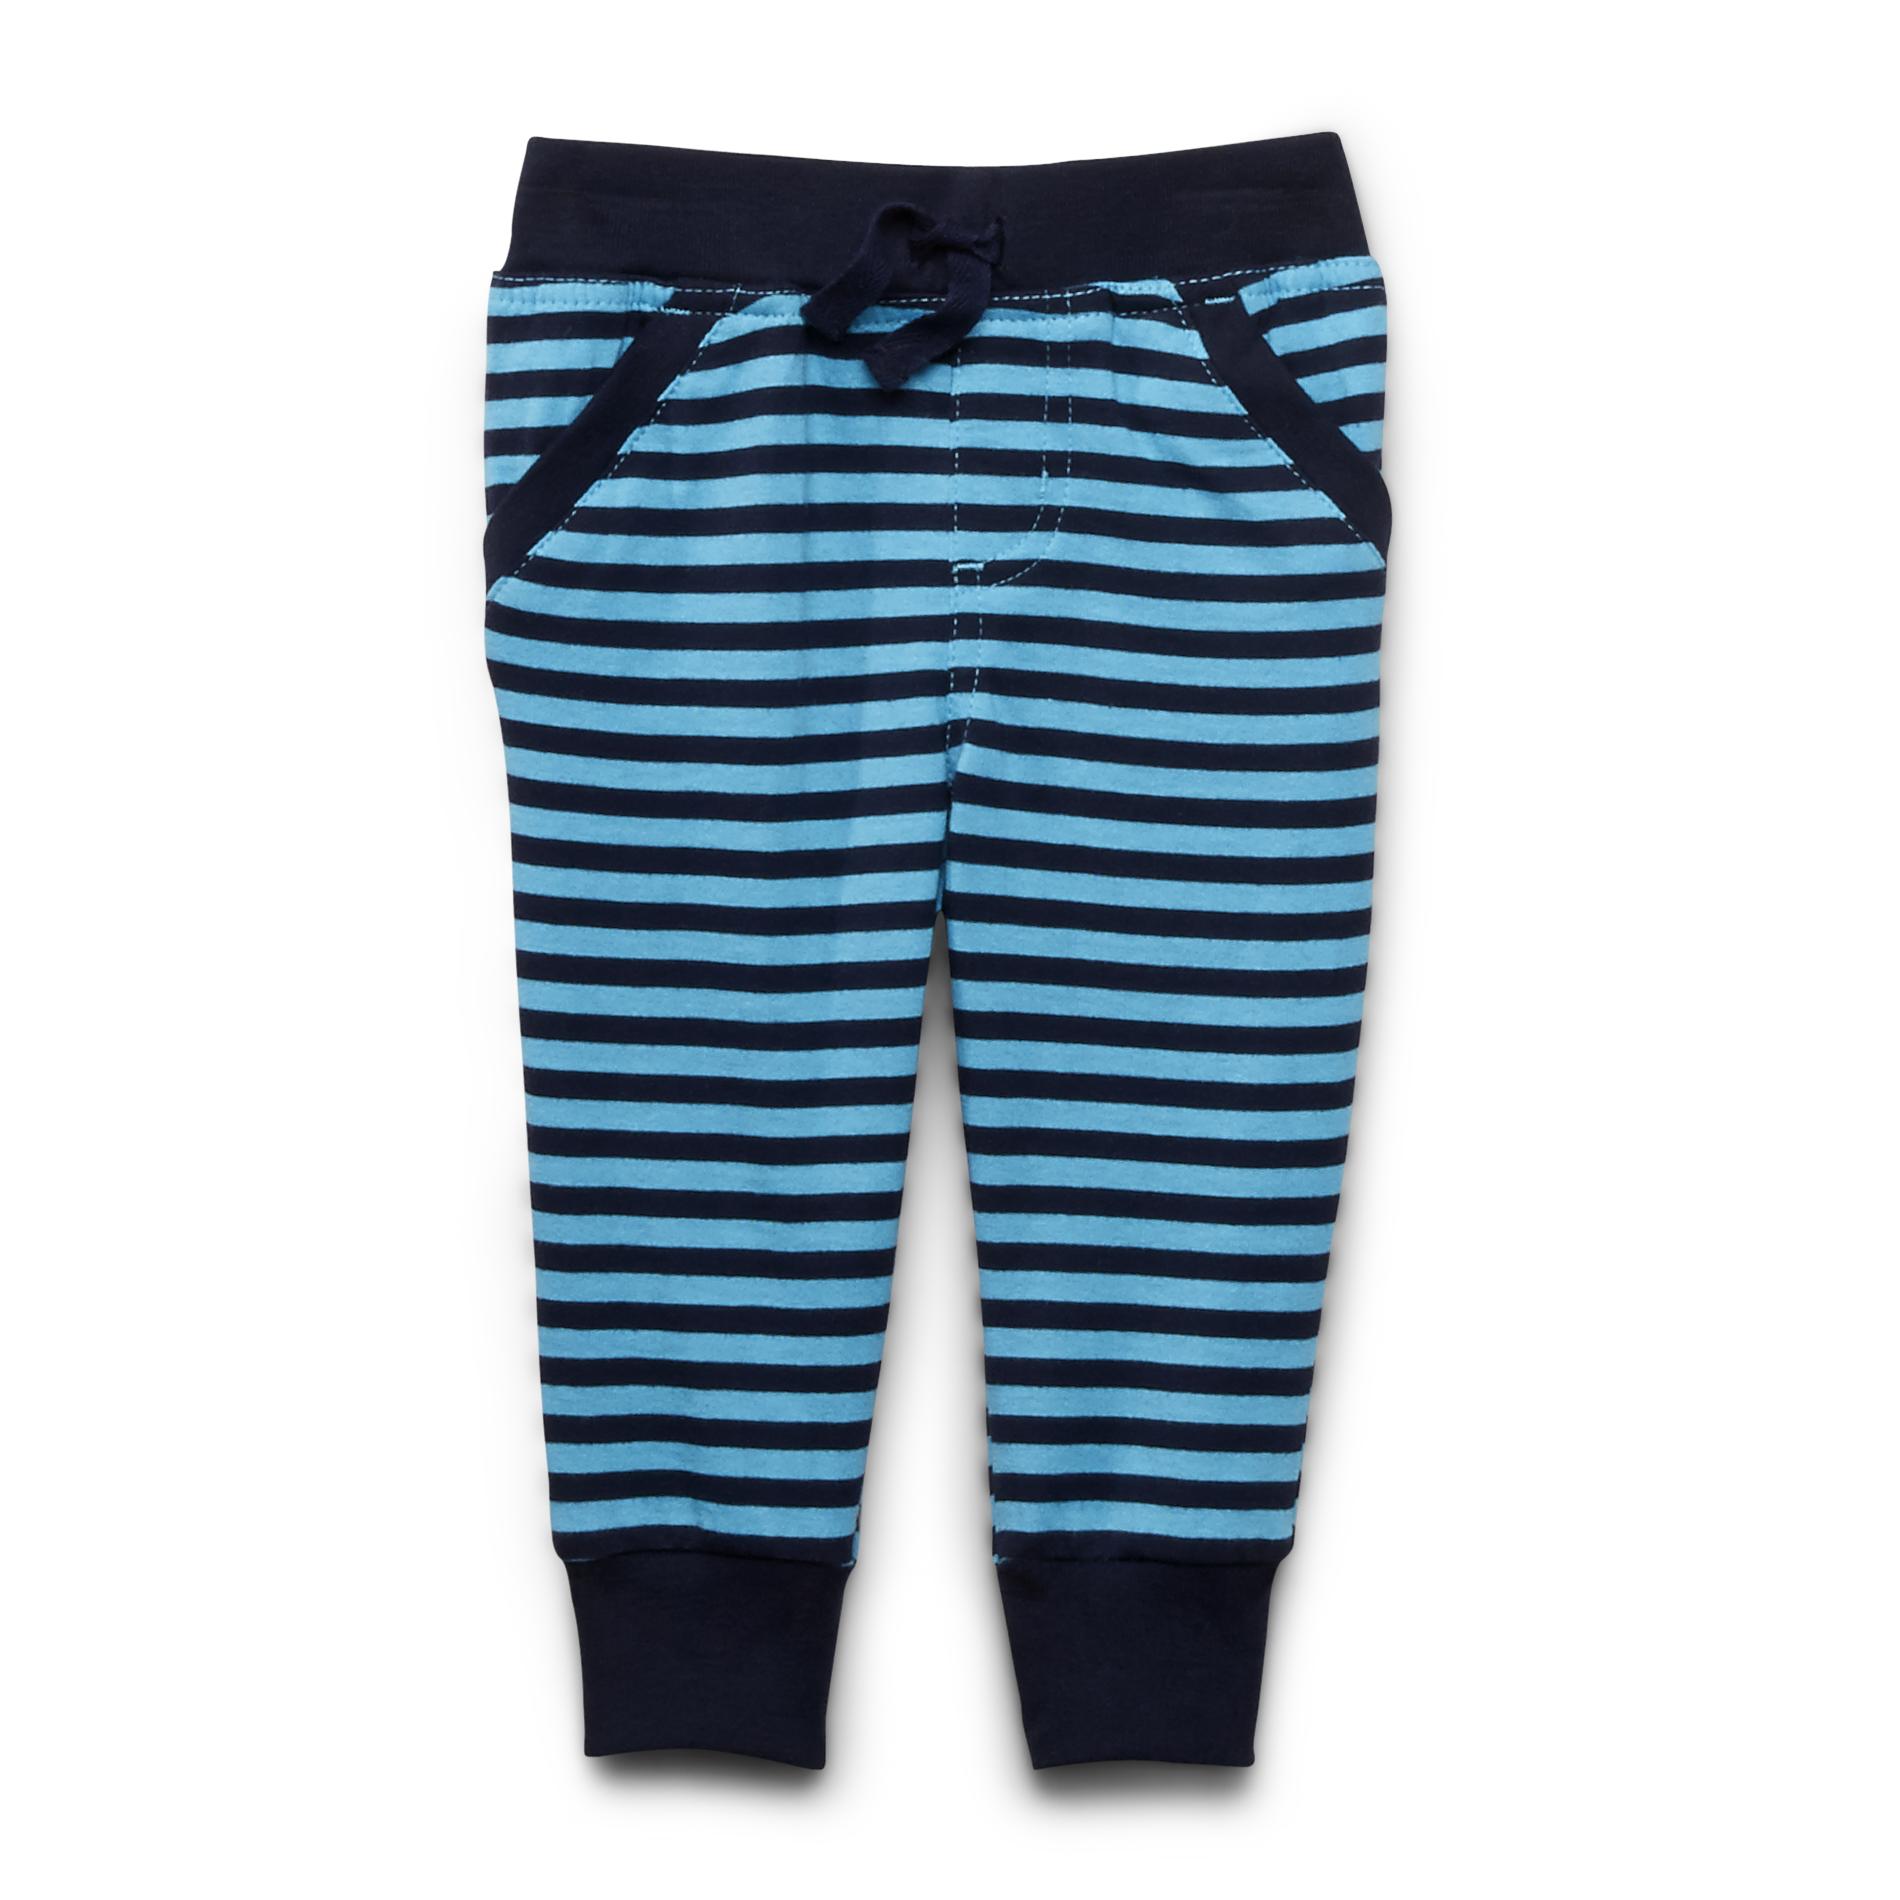 Sk2 Baby Newborn Boy's Sweatpants - Striped